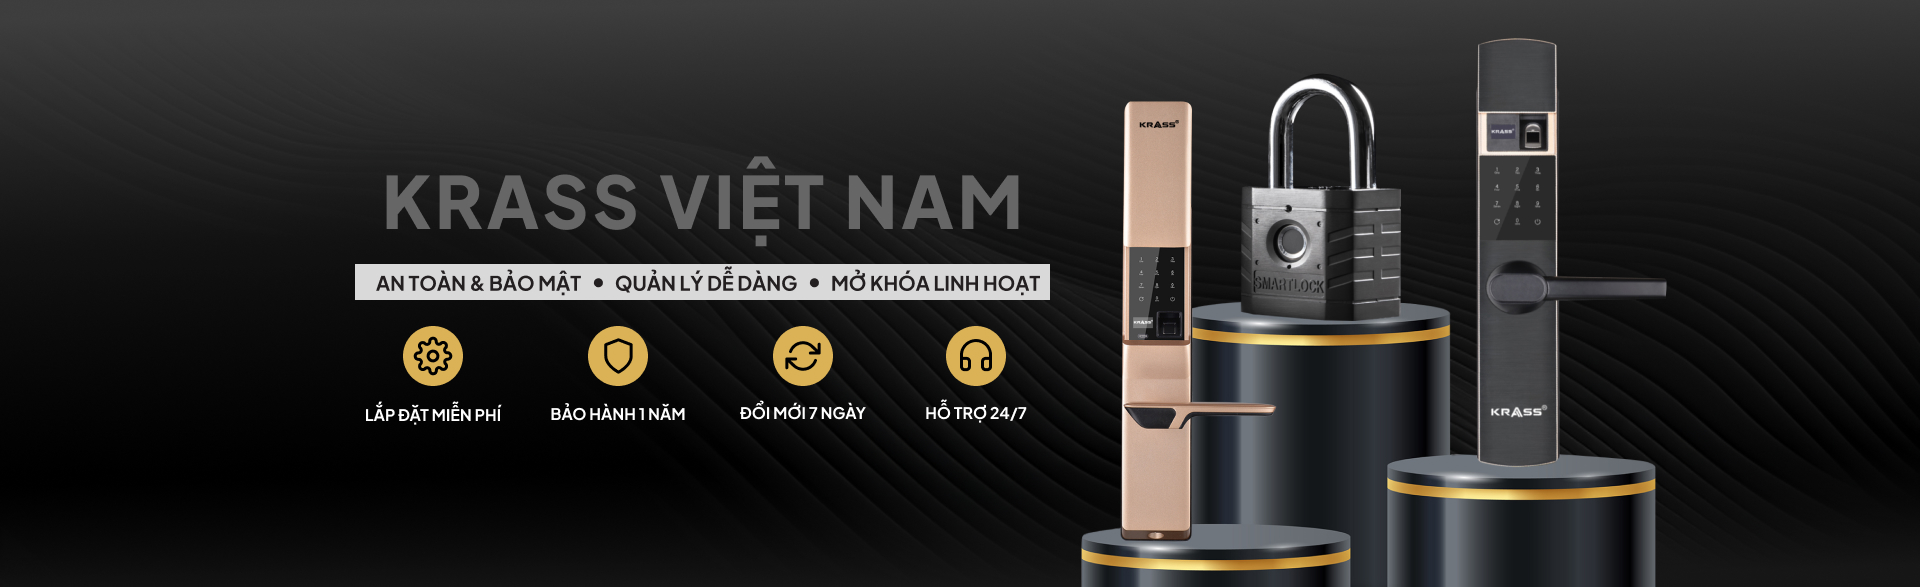 Krass Việt Nam